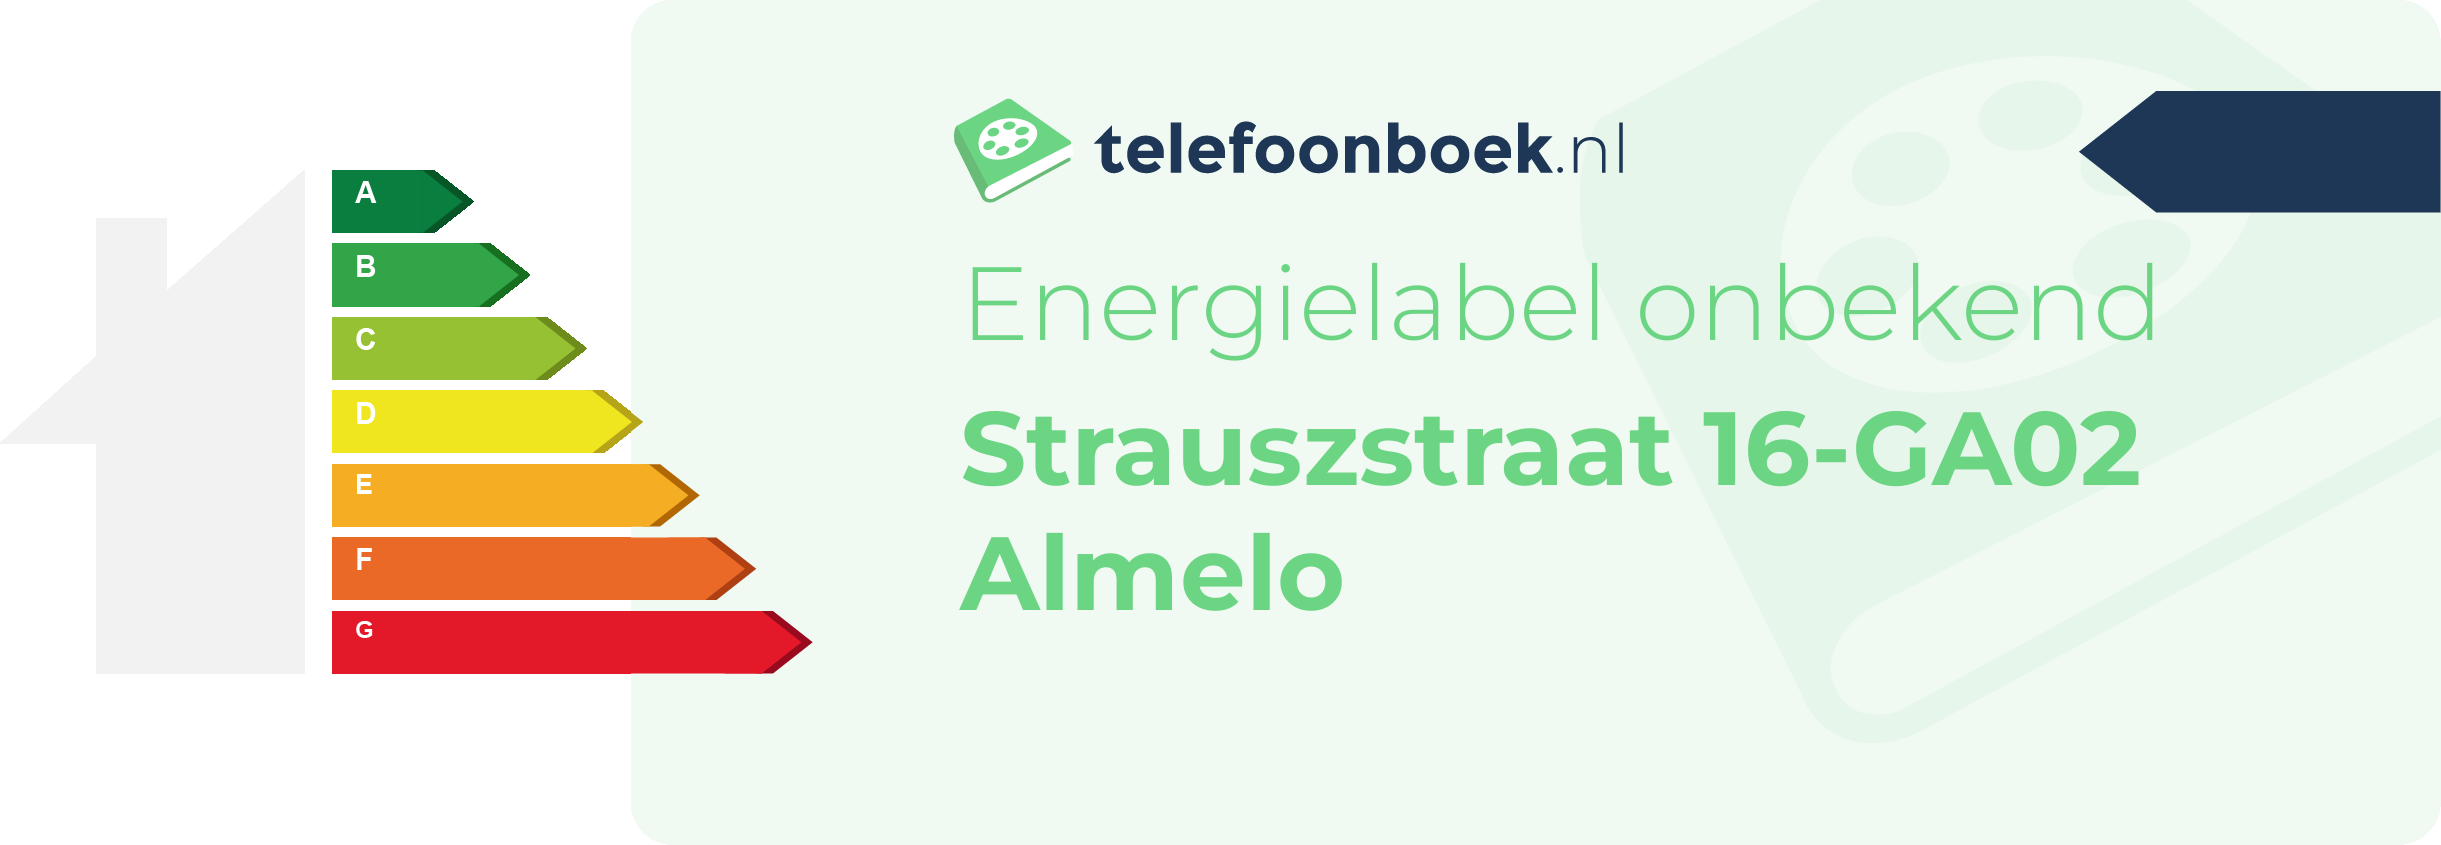 Energielabel Strauszstraat 16-GA02 Almelo